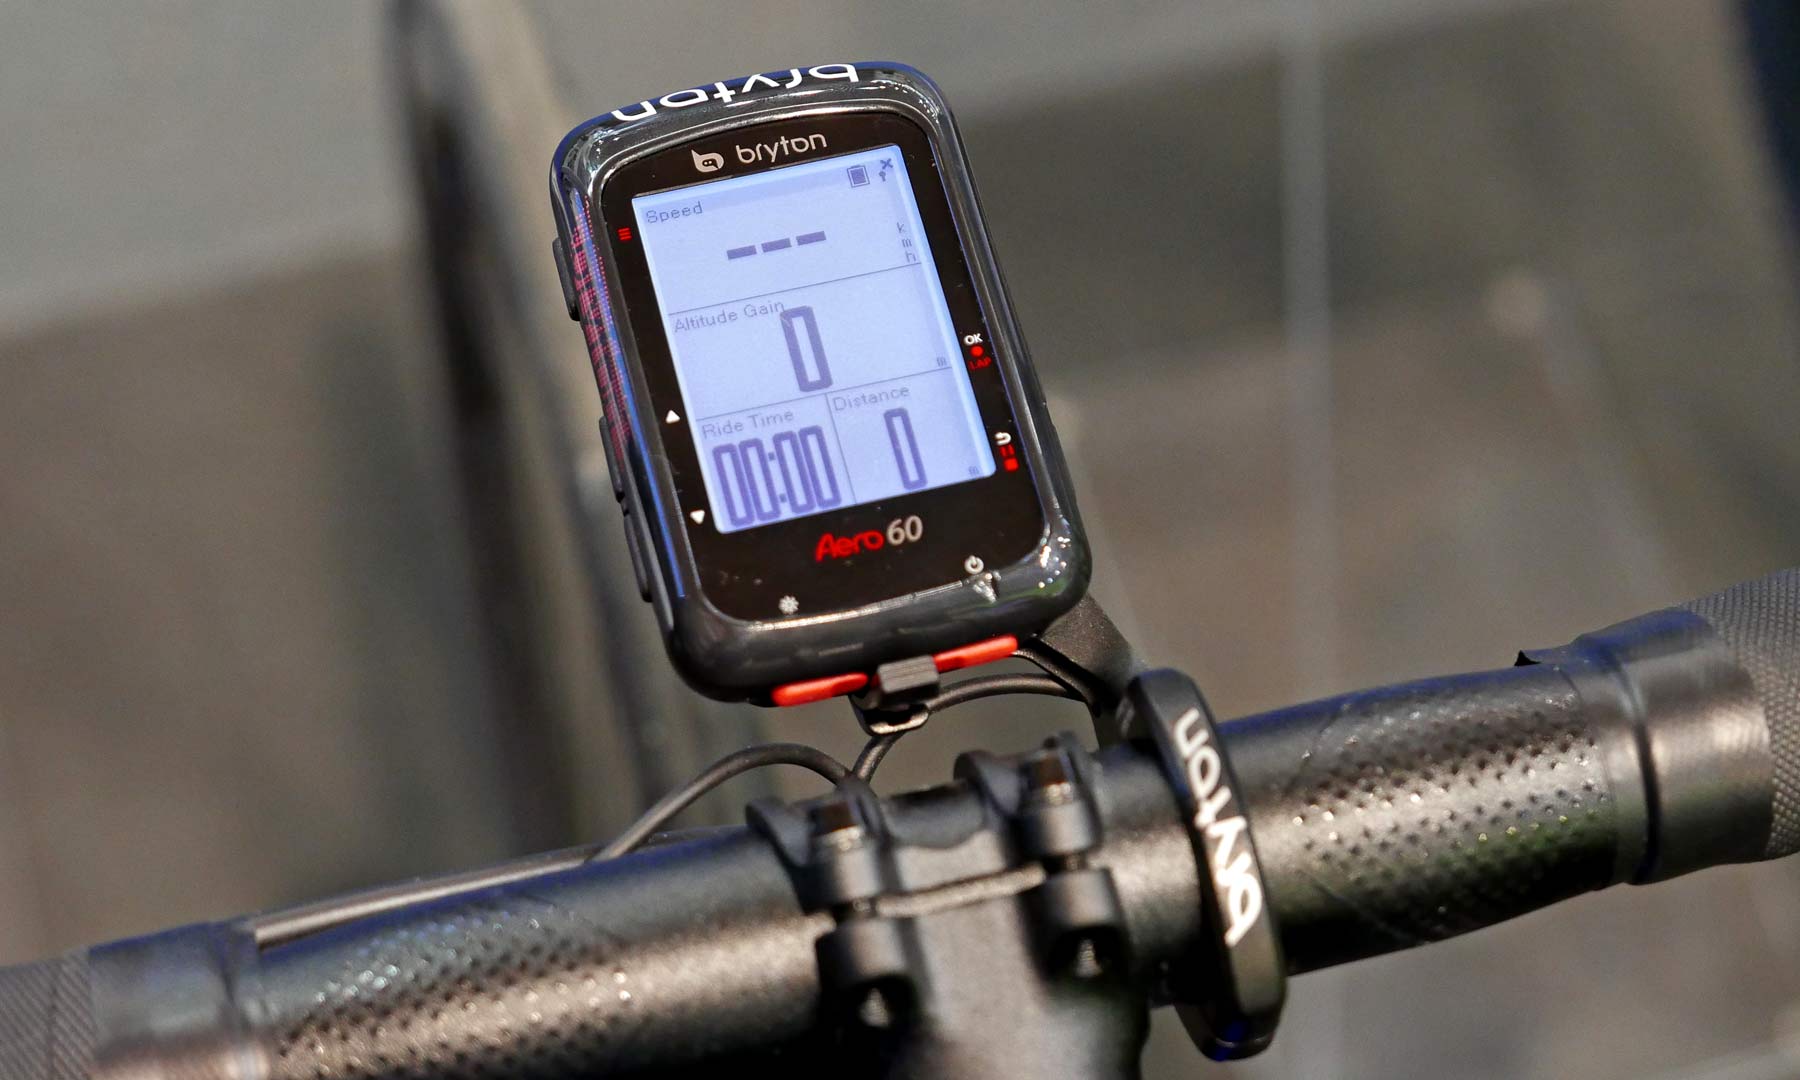 EB18: Bryton Aero 60 & Rider GPS range add true maps, boosts value